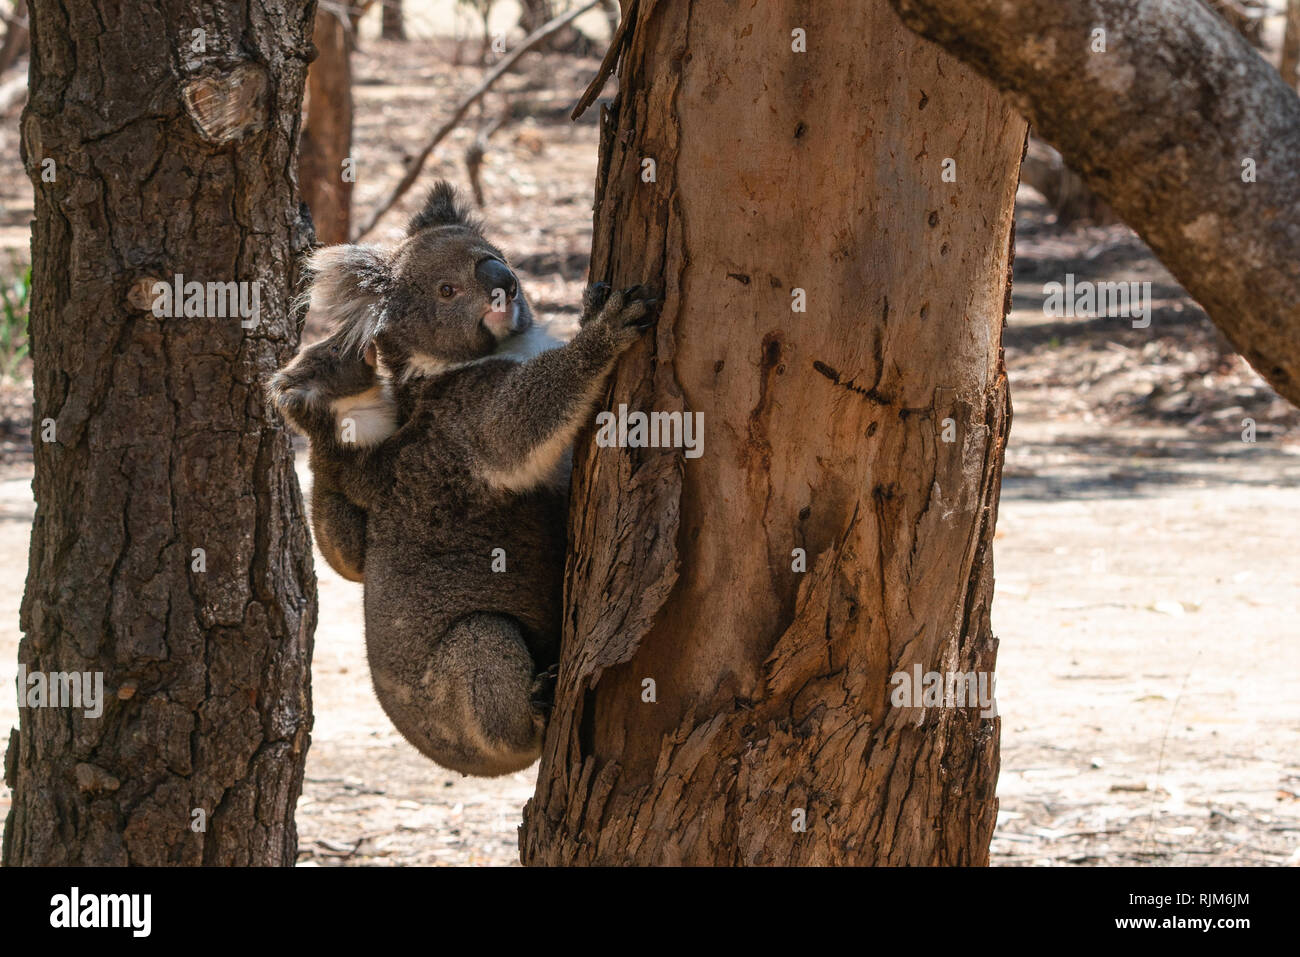 Wild Koalas on an Eucalyptus tree trunk with the mother carrying her baby koala on her back on Kangaroo island SA Australia Stock Photo